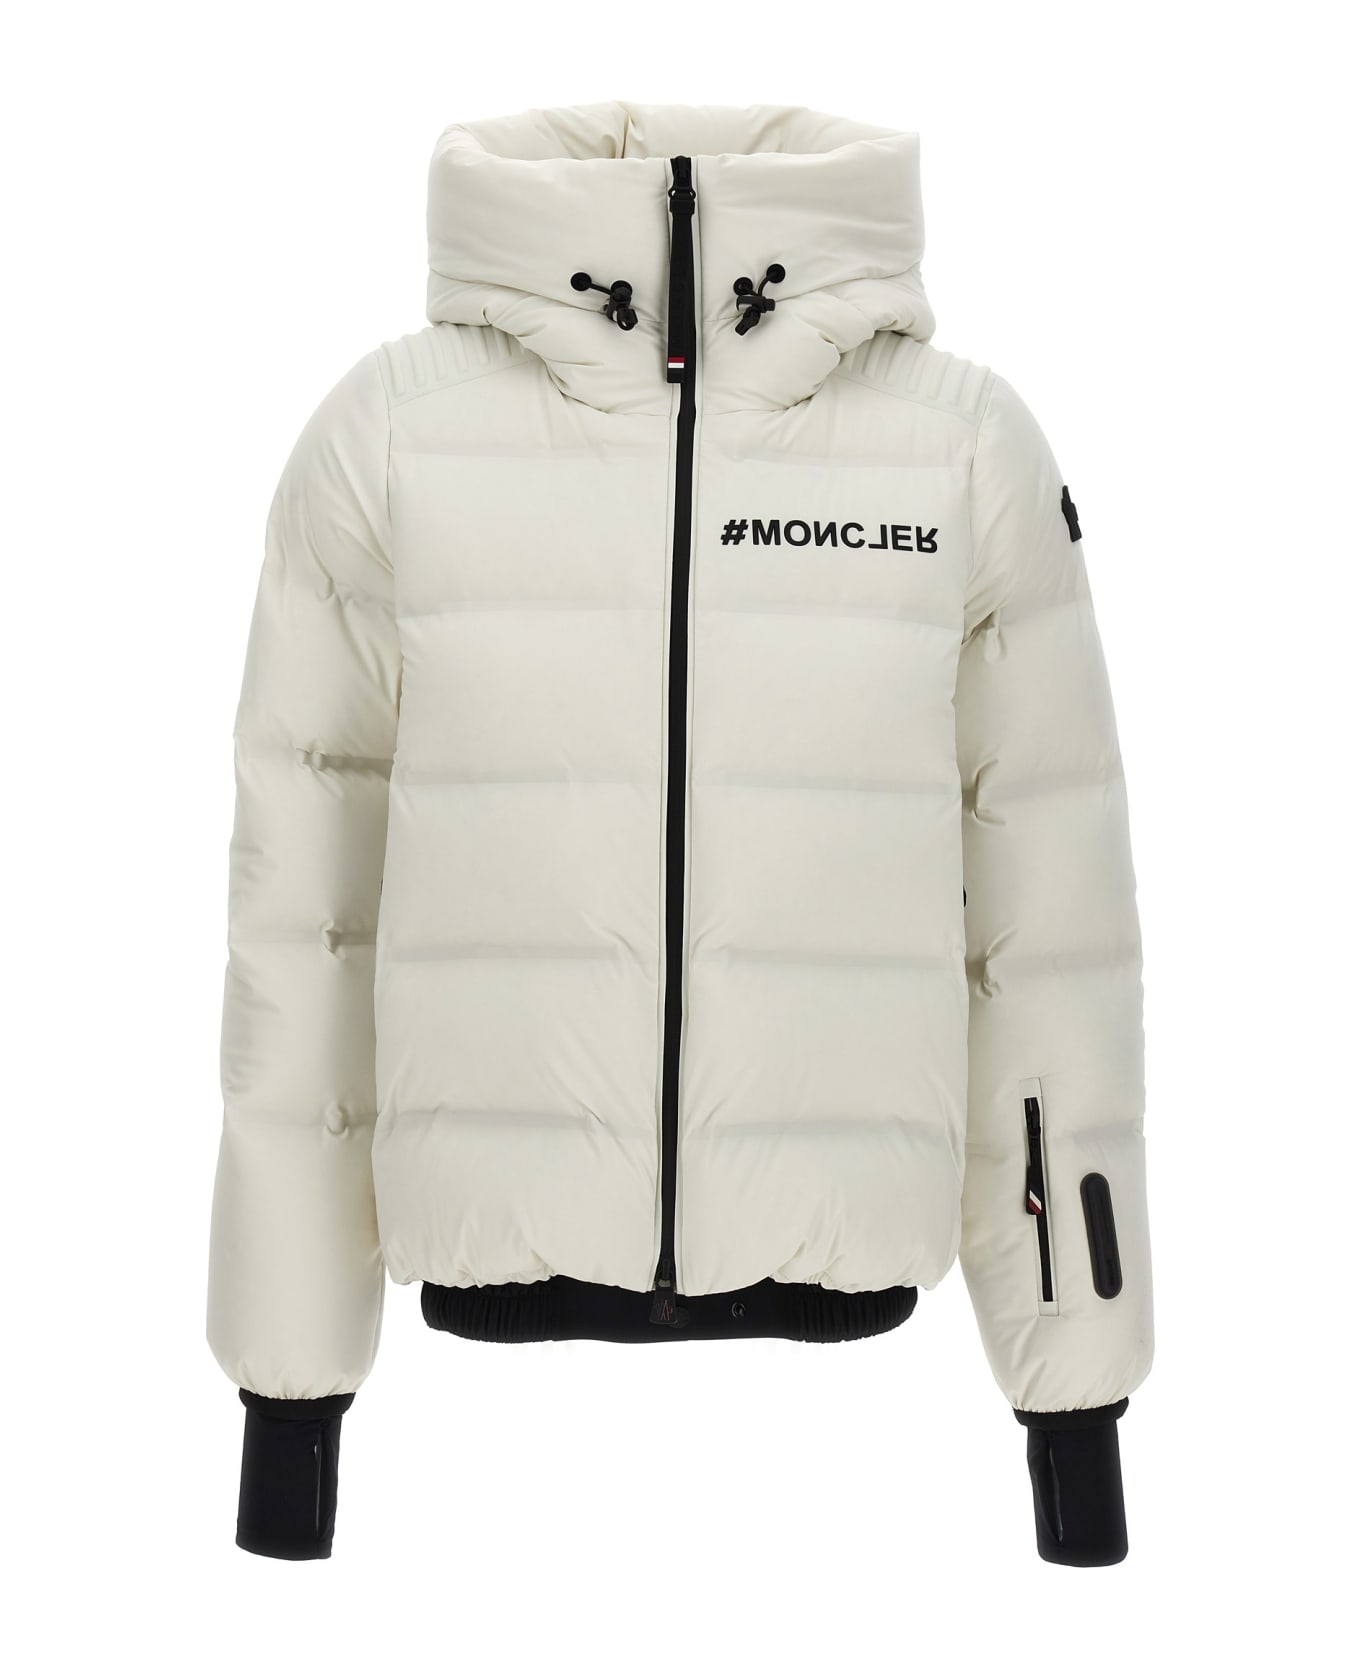 Moncler Grenoble 'suisses' Down Jacket - White/Black ダウンジャケット